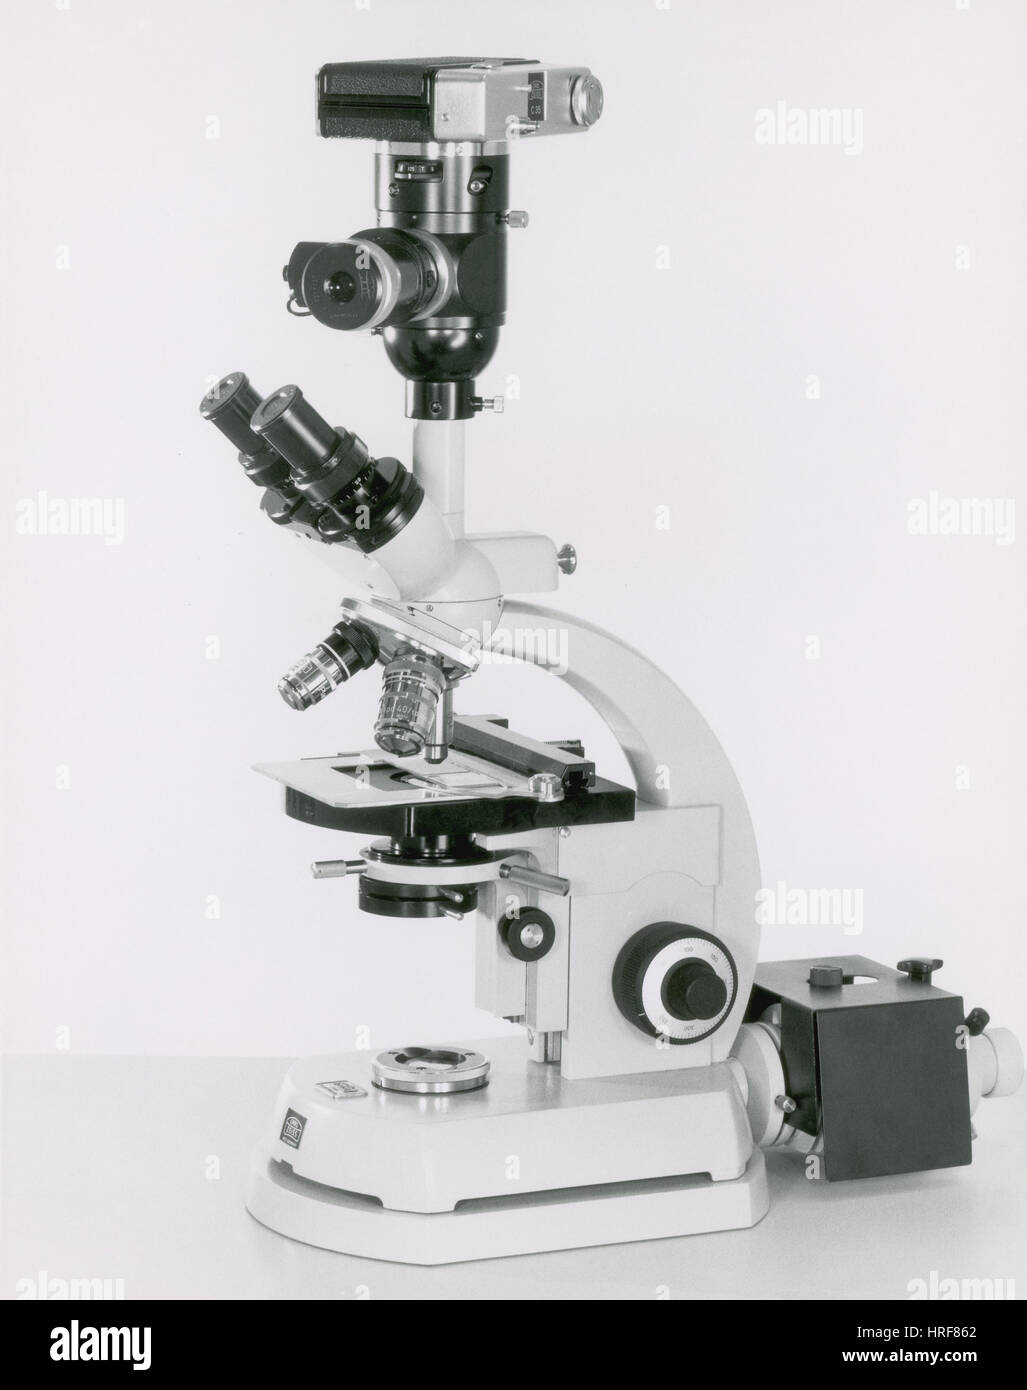 Zeiss Standard Microscope Stock Photo